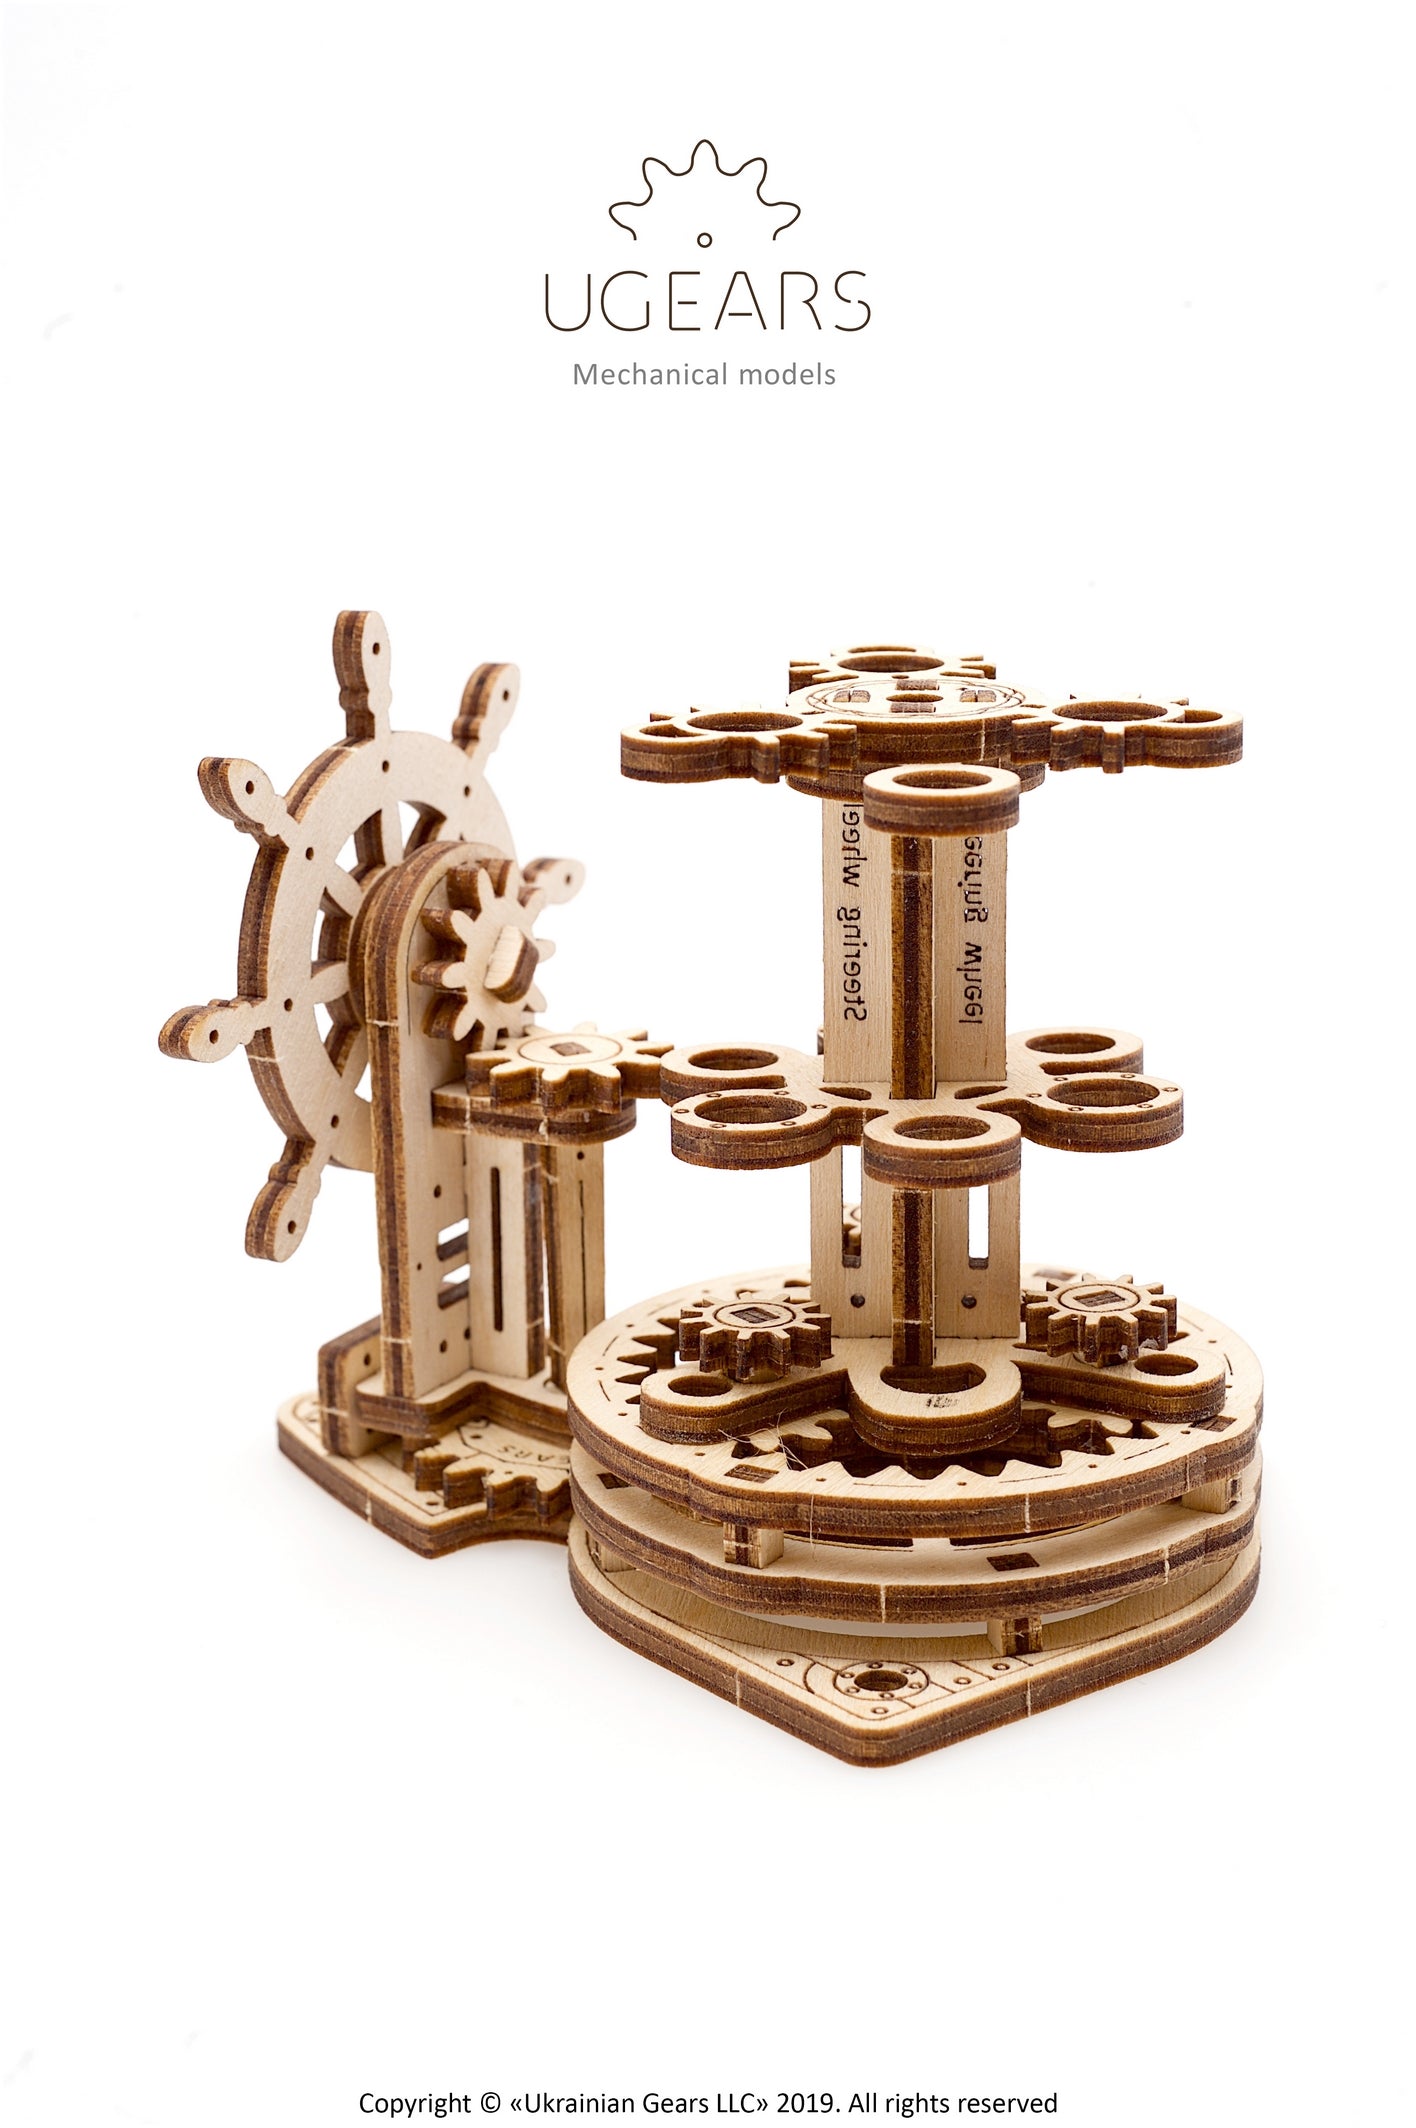 Ugears Wheel Organizer ★Mechanical 3D Puzzle Kit Model Toys Gift Present Birthday Xmas Christmas Kids Adults